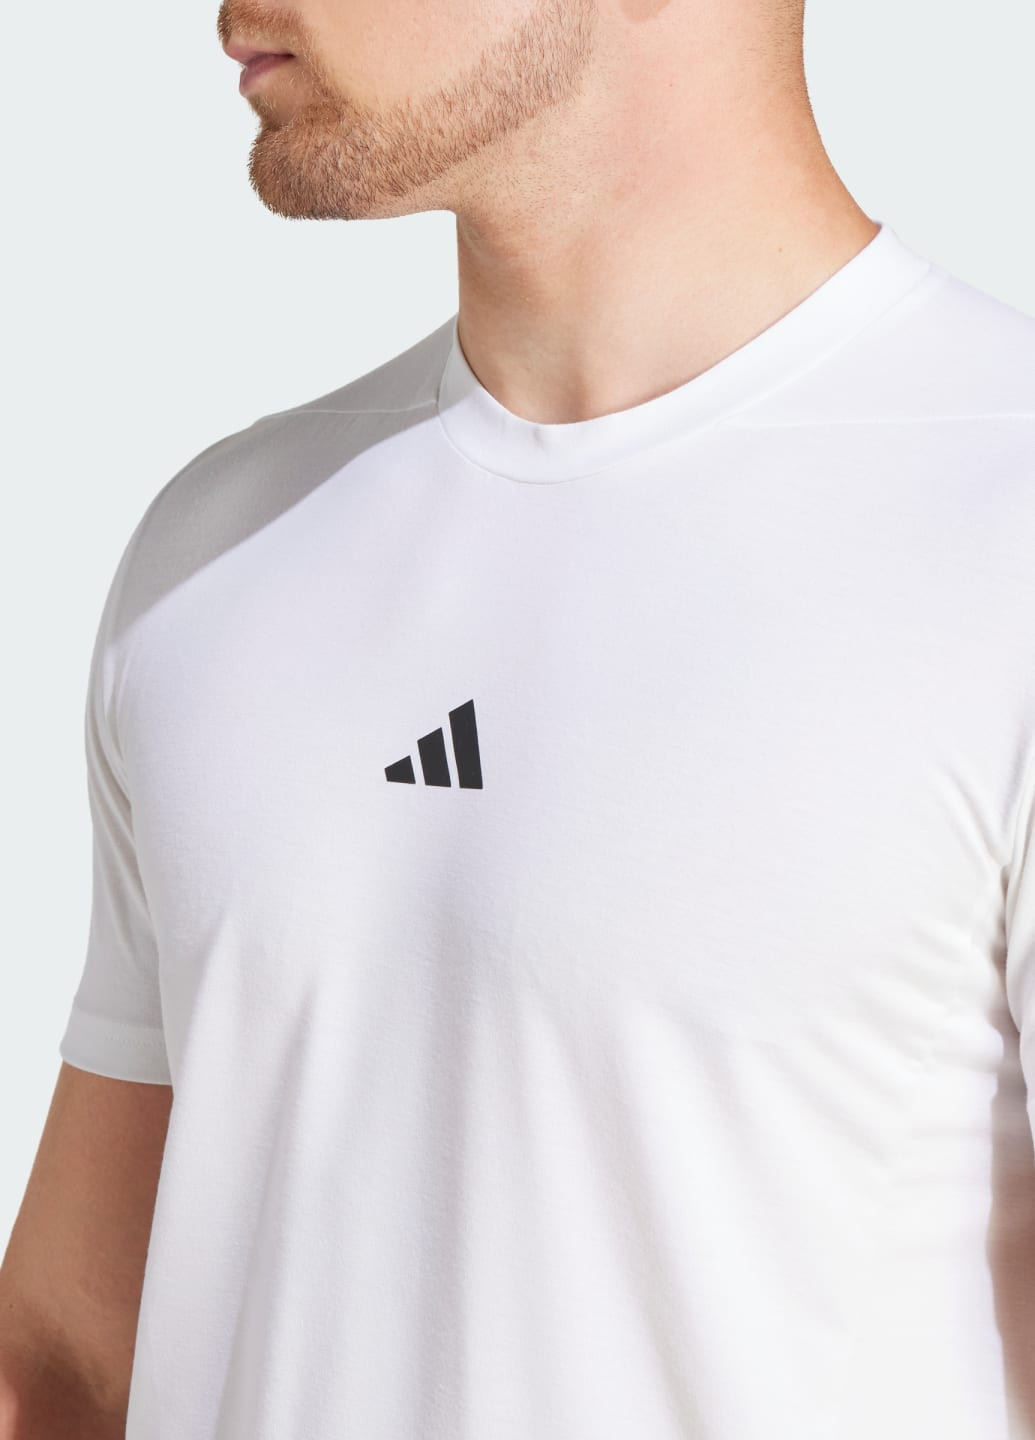 Біла футболка designed for training workout adidas